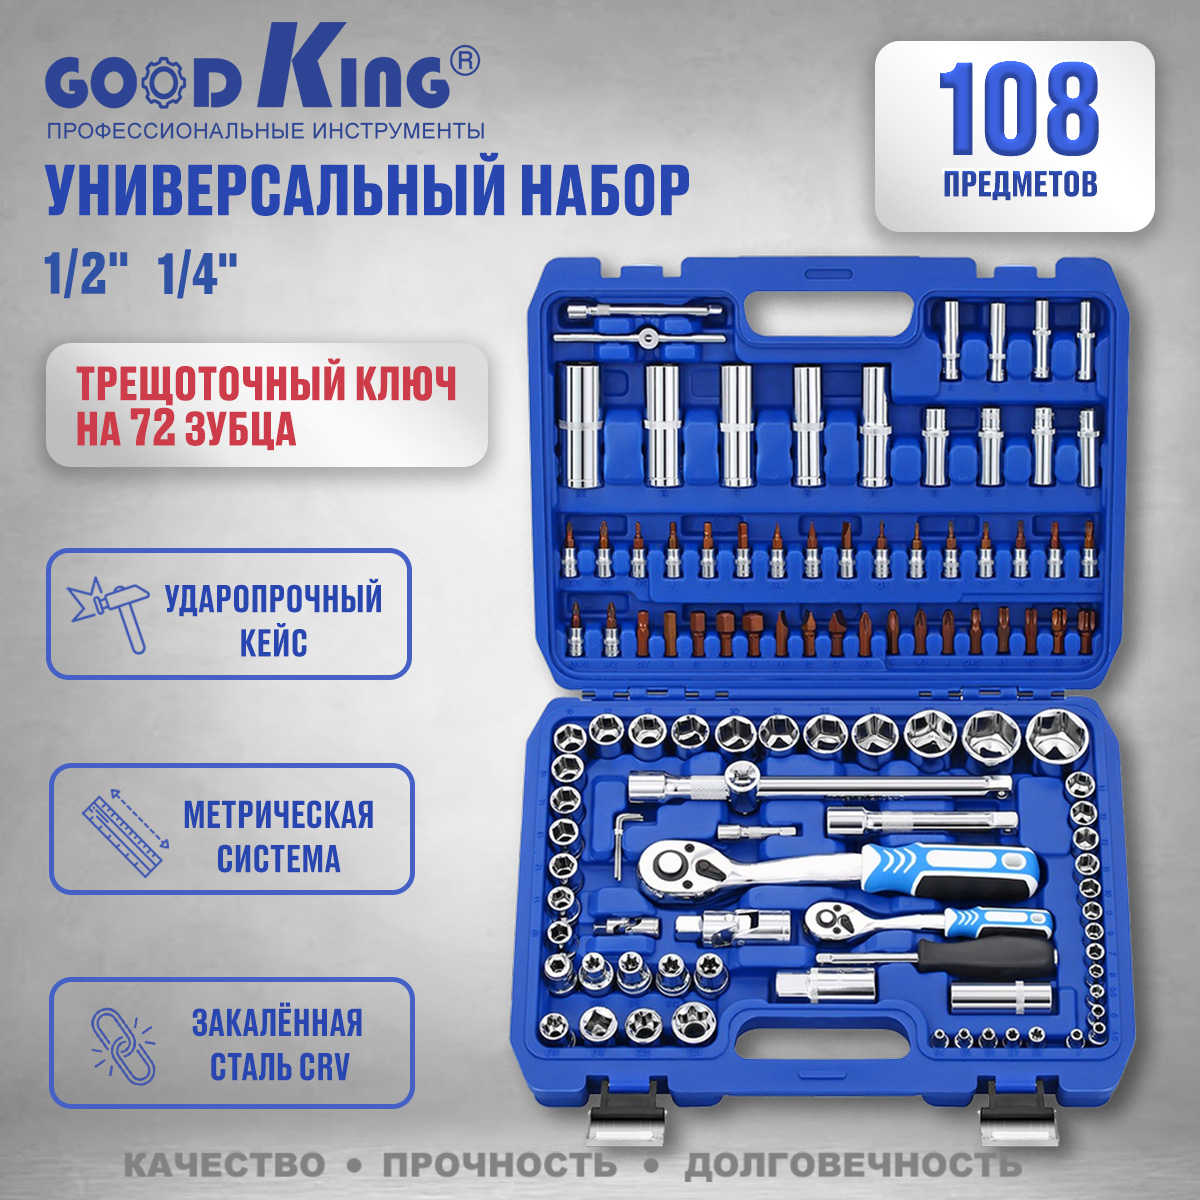 мужской набор с машинкой для стрижки Набор инструментов GOODKING 108 шт. B-10108 1/4